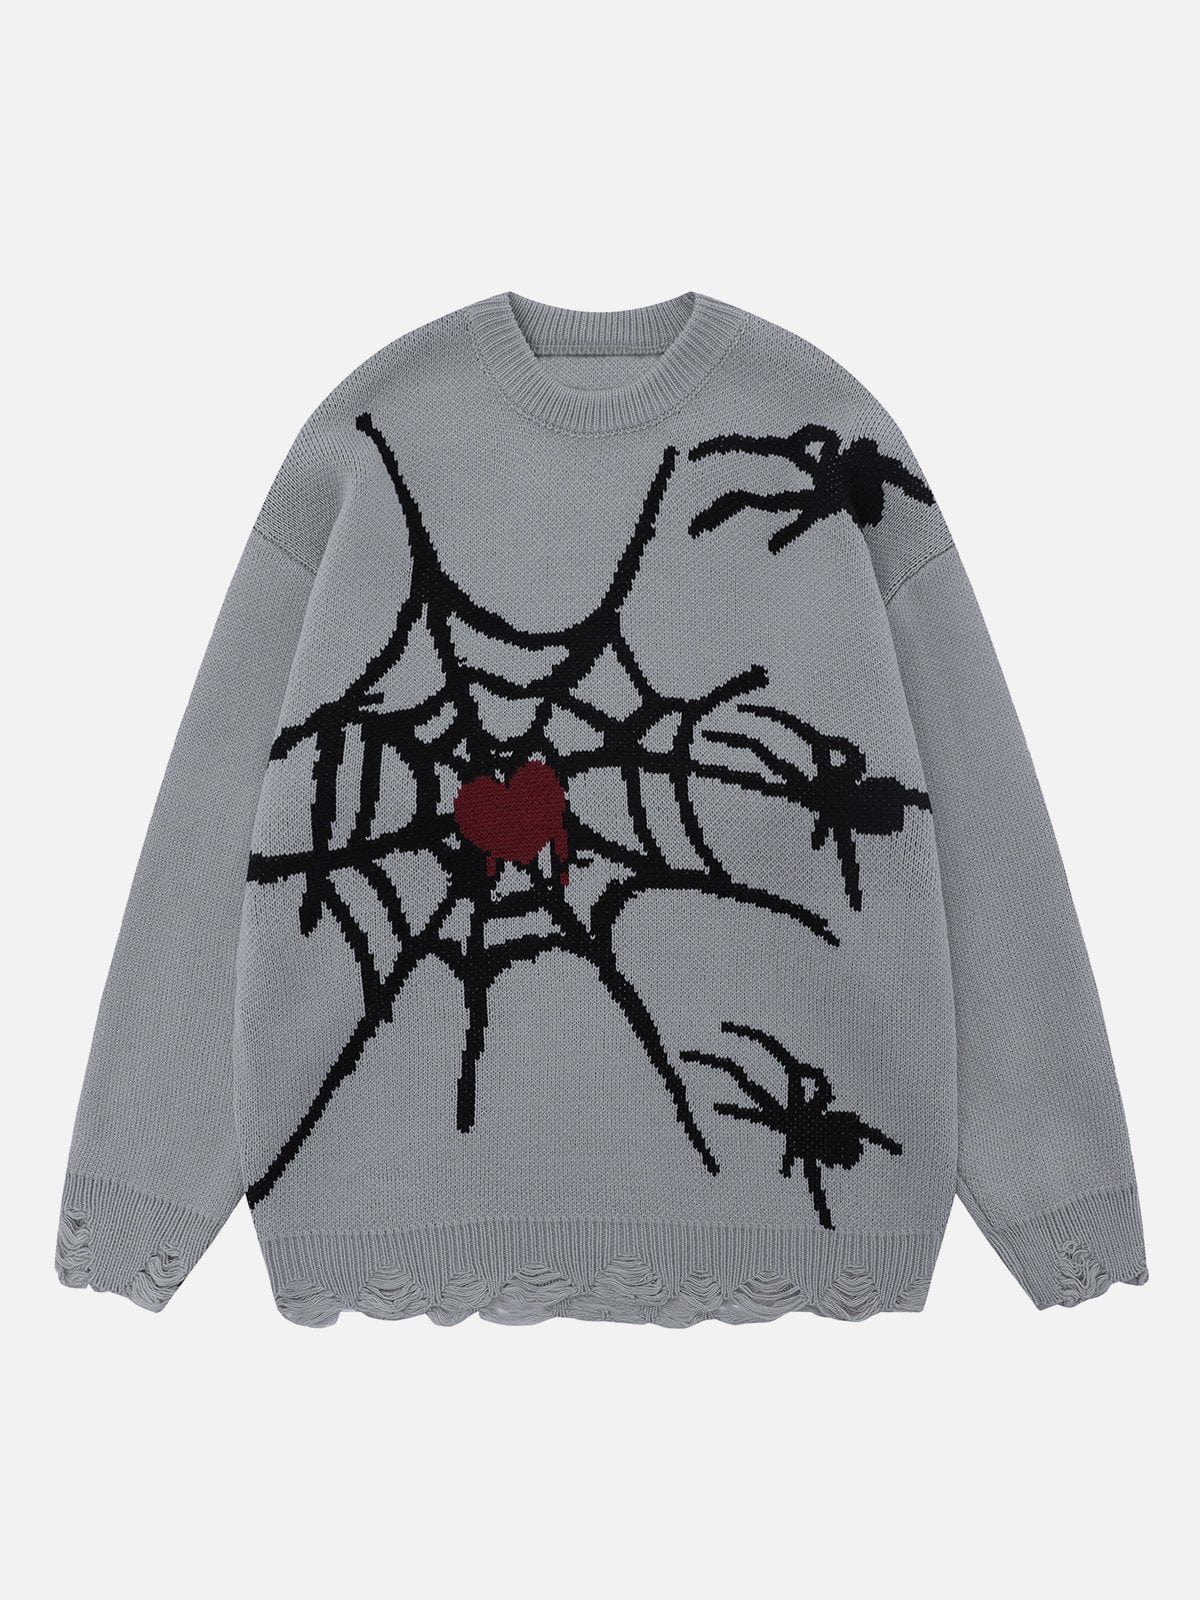 NEV Heart Spider Jacquard Sweater